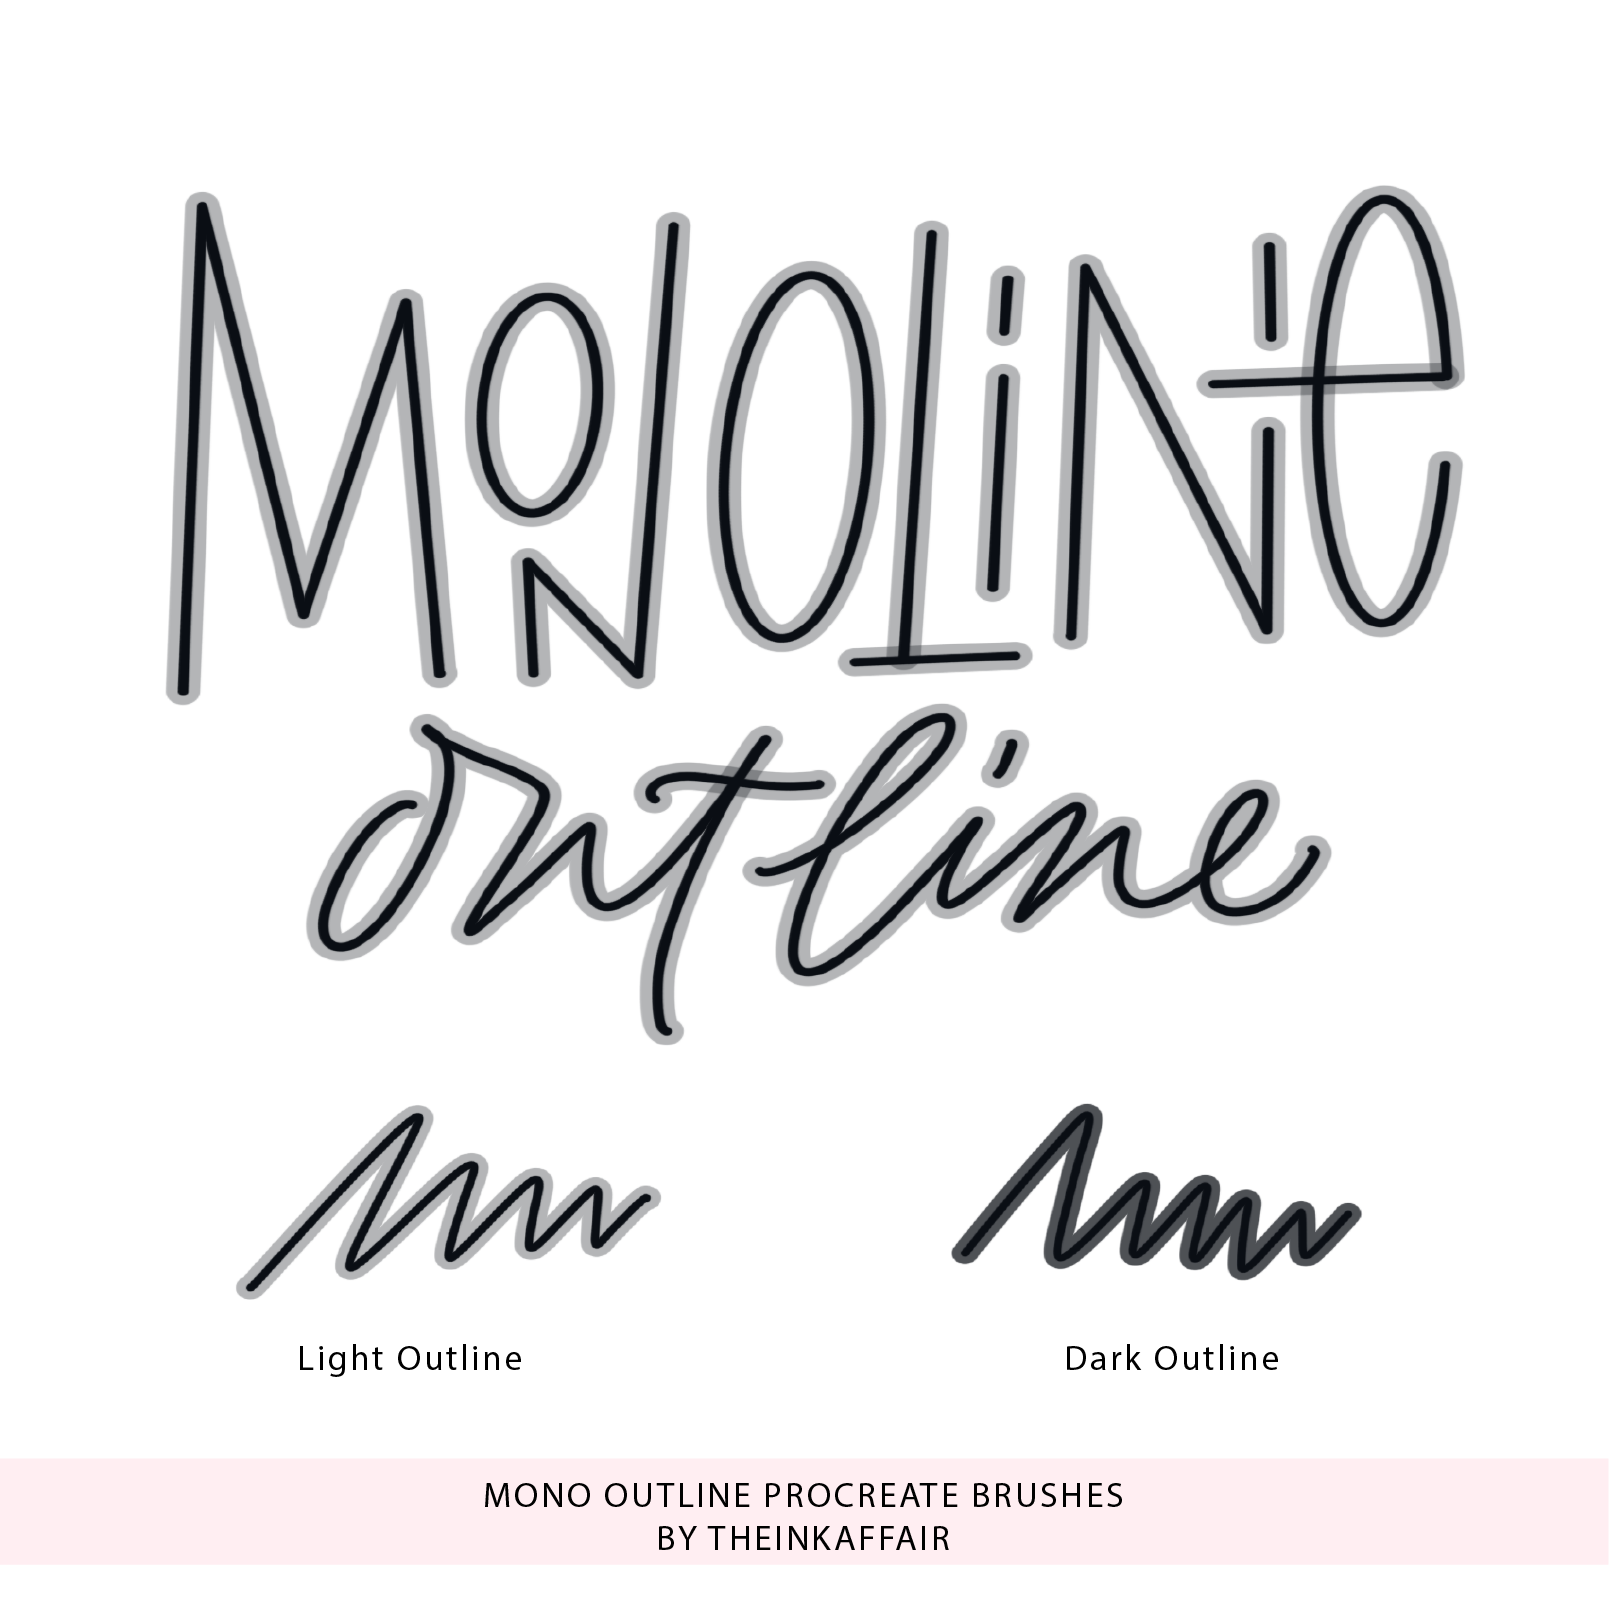 Monoline outline - 2 procreate brushes